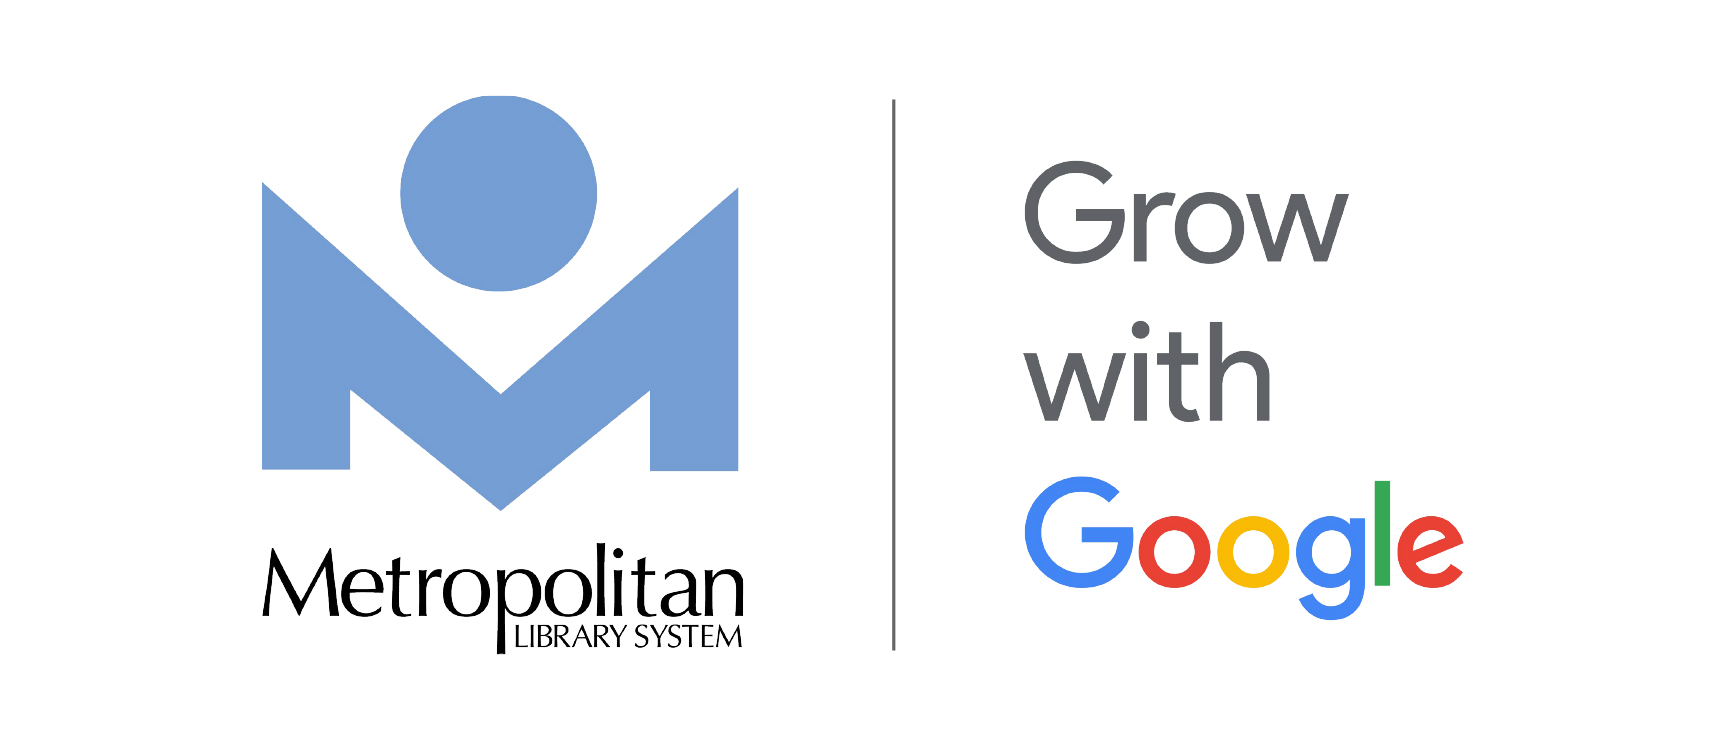 Metro Grow with Google header image